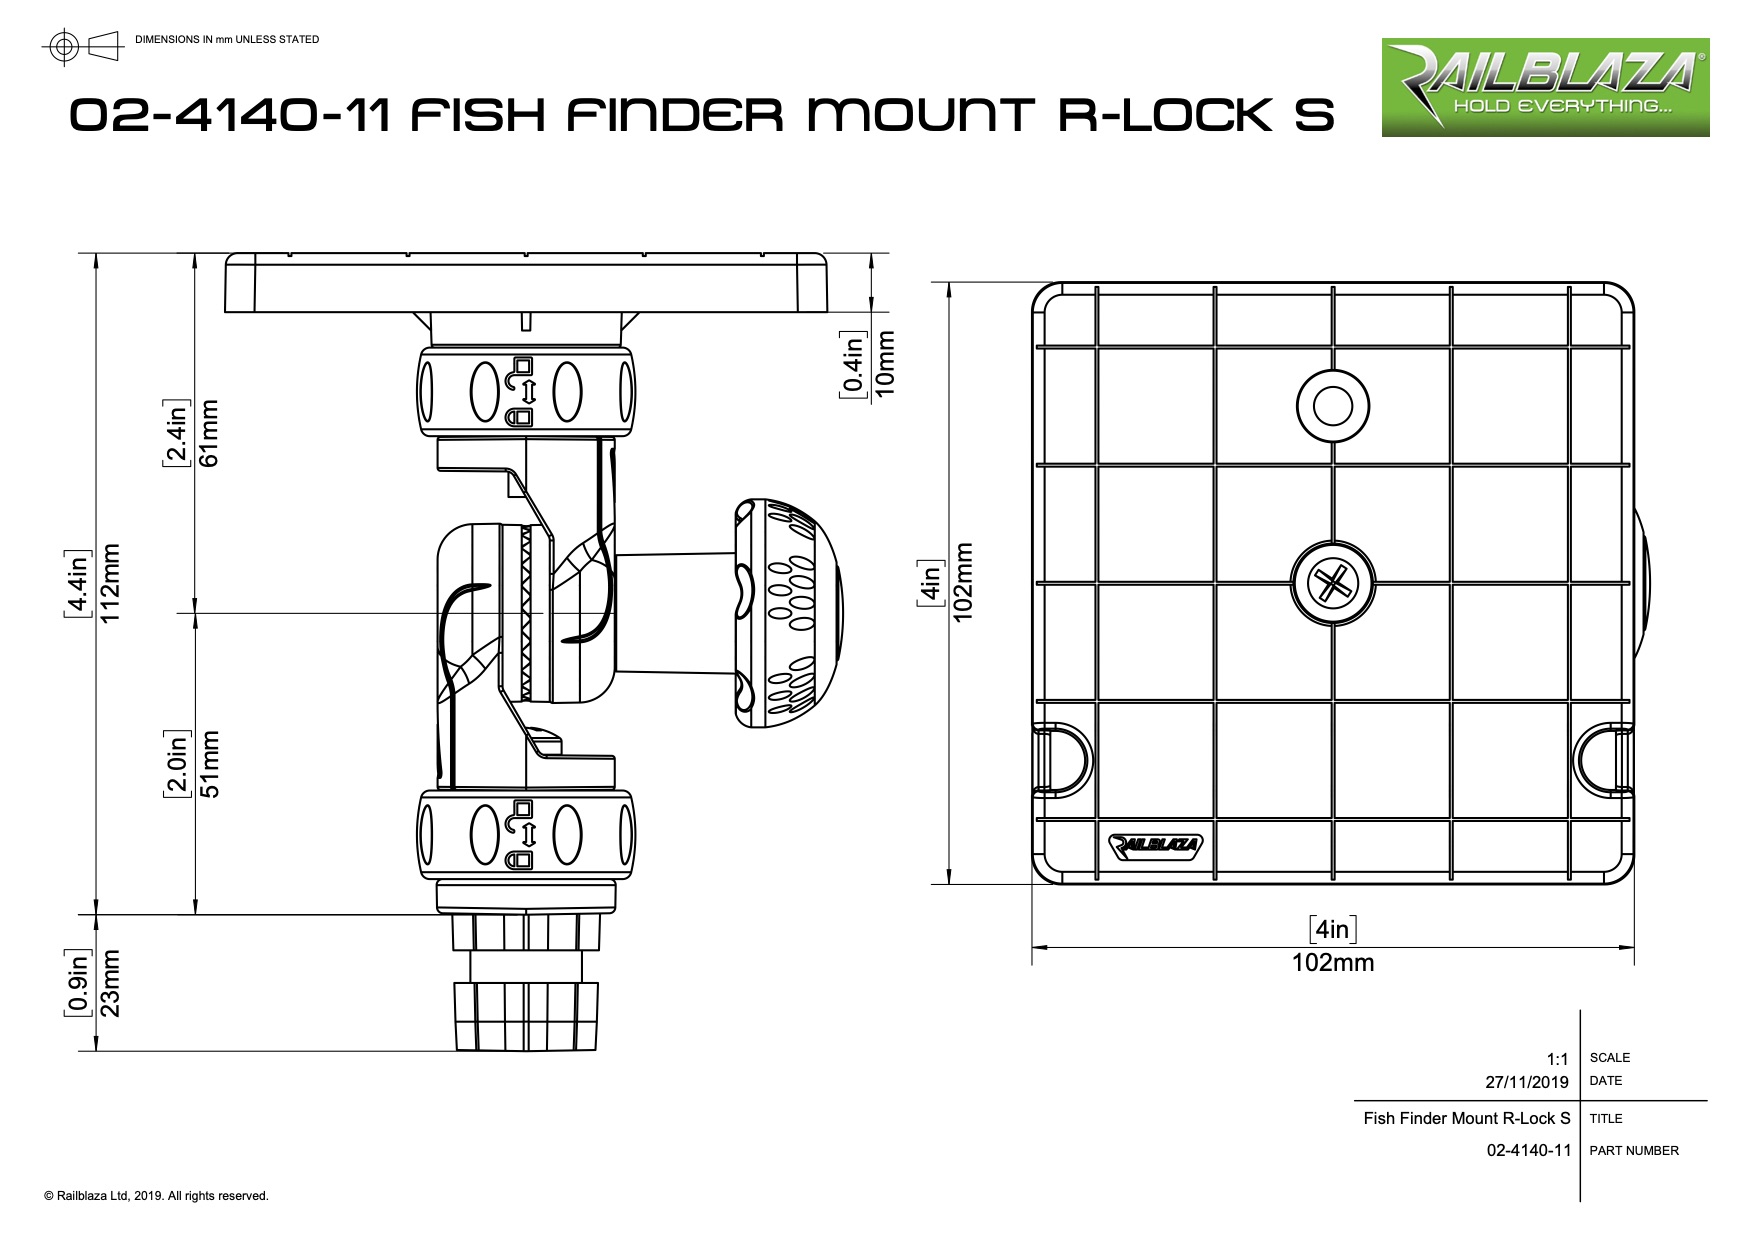 Fish-Finder-Mount-R-Lock-S-Fish-Finder-Mount-R-Lock-S-Drawing-2295_115227.jpg